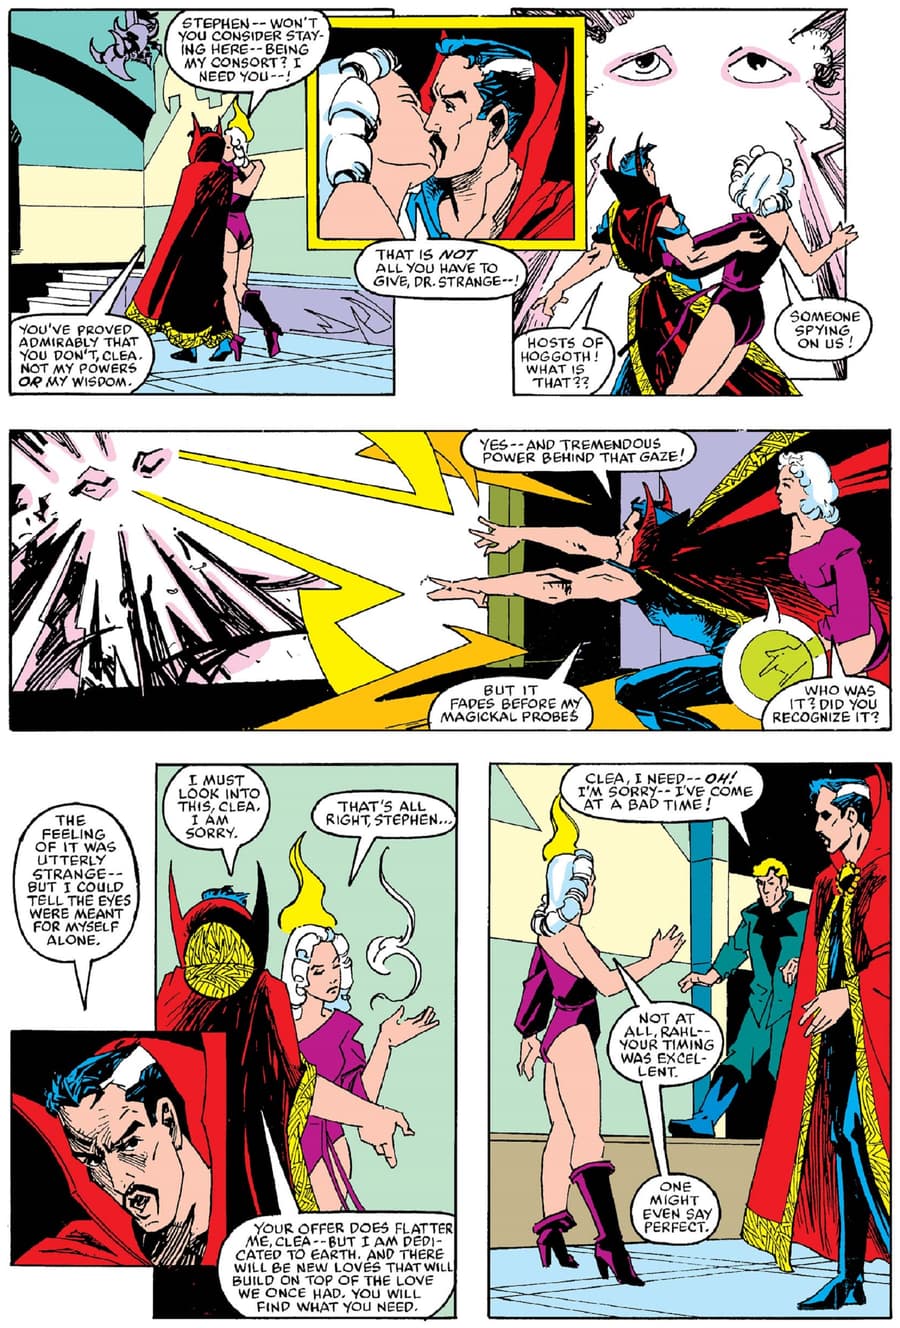 Clea asks Strange to be her consort in DOCTOR STRANGE (1974) #74.